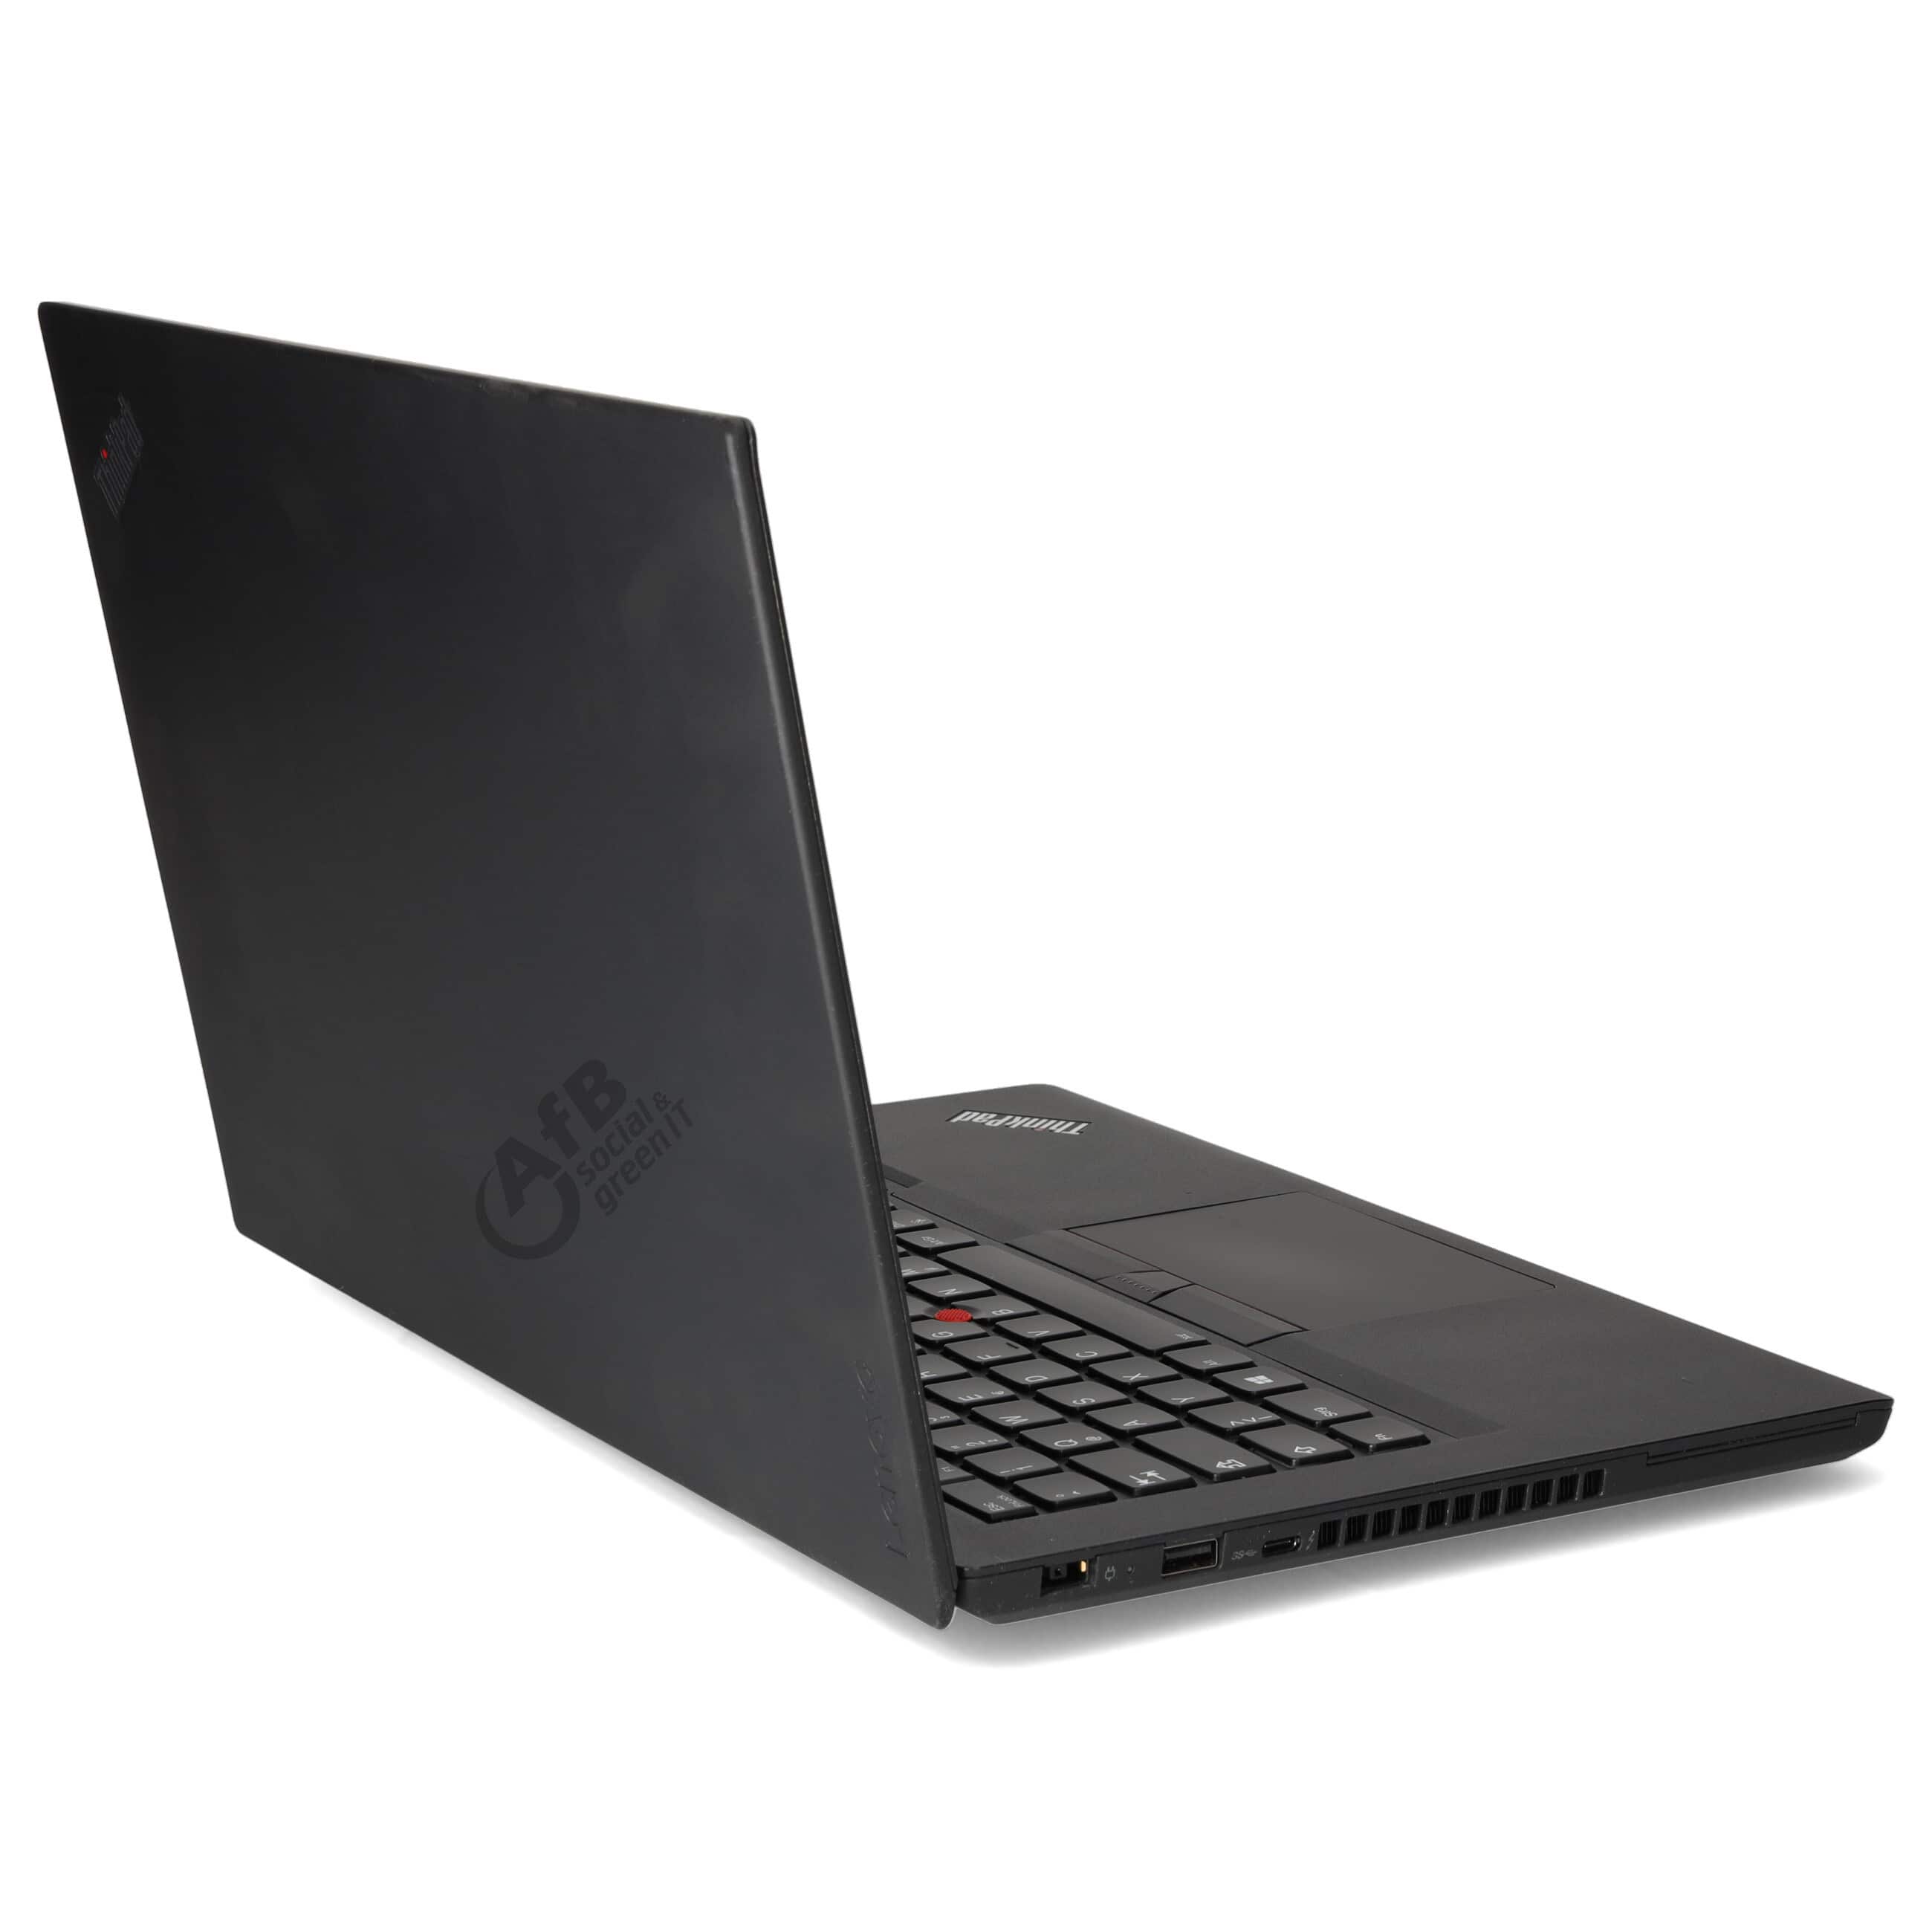 Lenovo ThinkPad T470 

 - 14,0 Zoll - Intel Core i5 6300U @ 2,4 GHz - 16 GB DDR4 - 256 GB SSD - 1366 x 768 WXGA - Windows 10 Professional